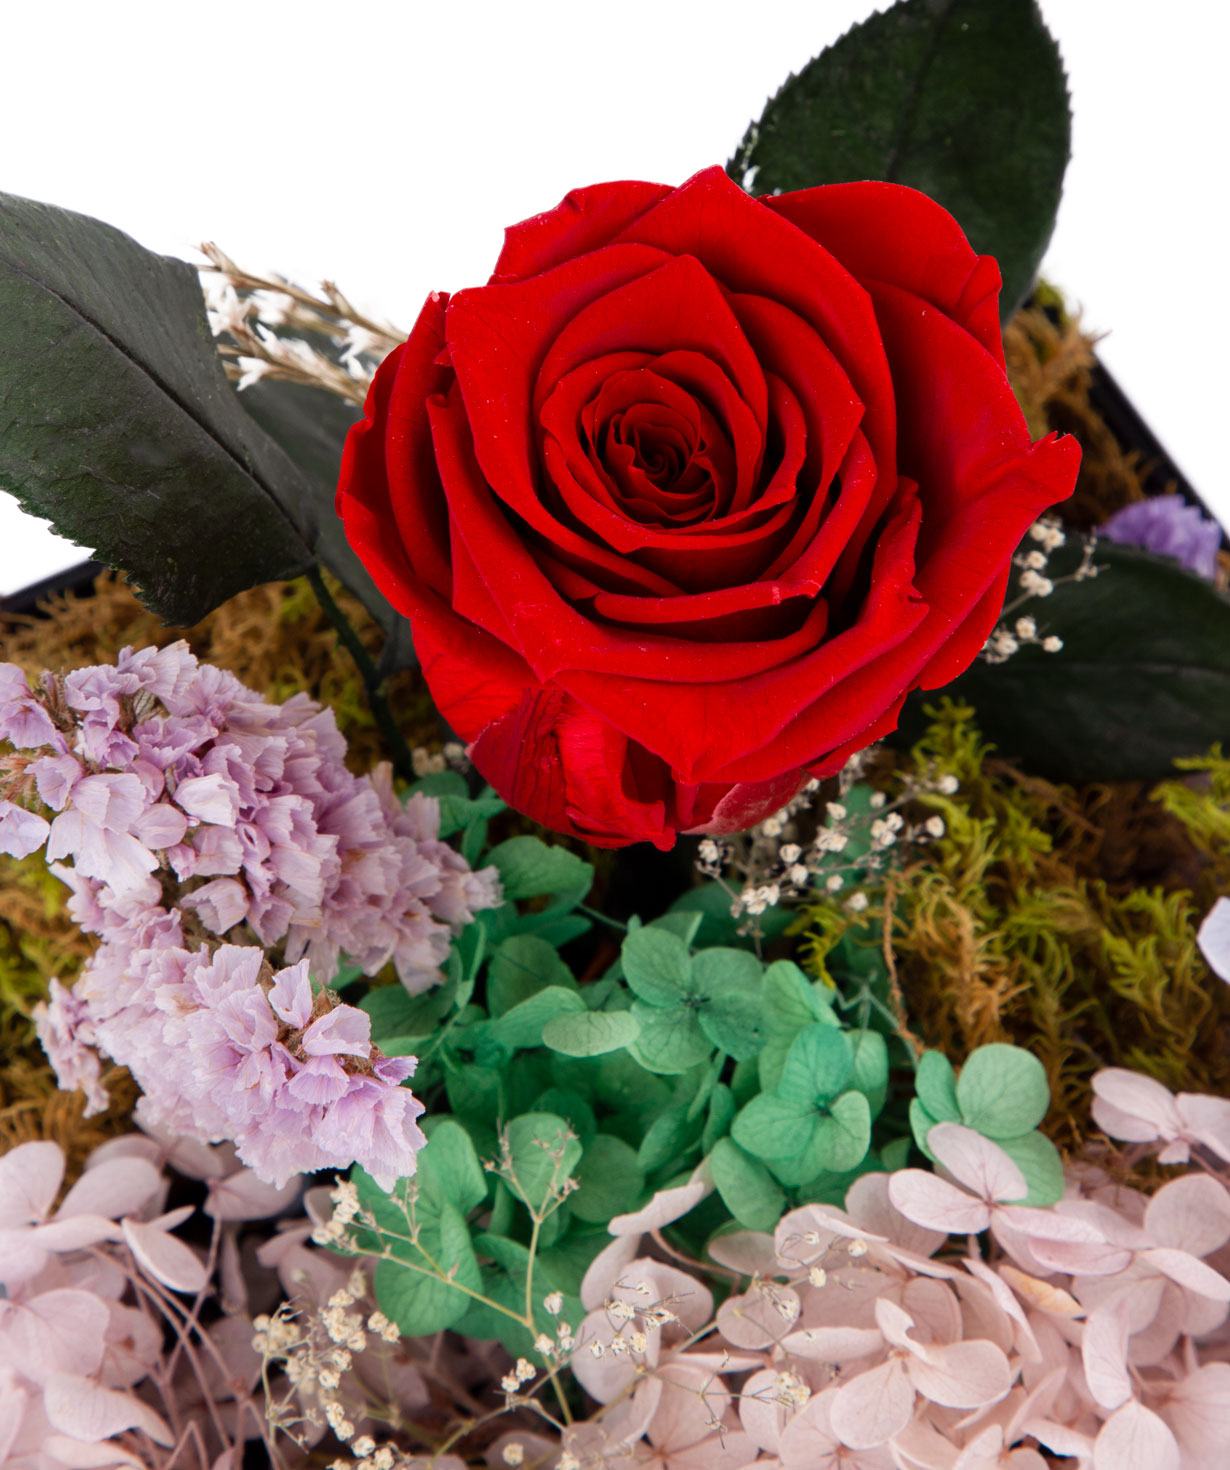 Bouquet `EM Flowers` eternal N2